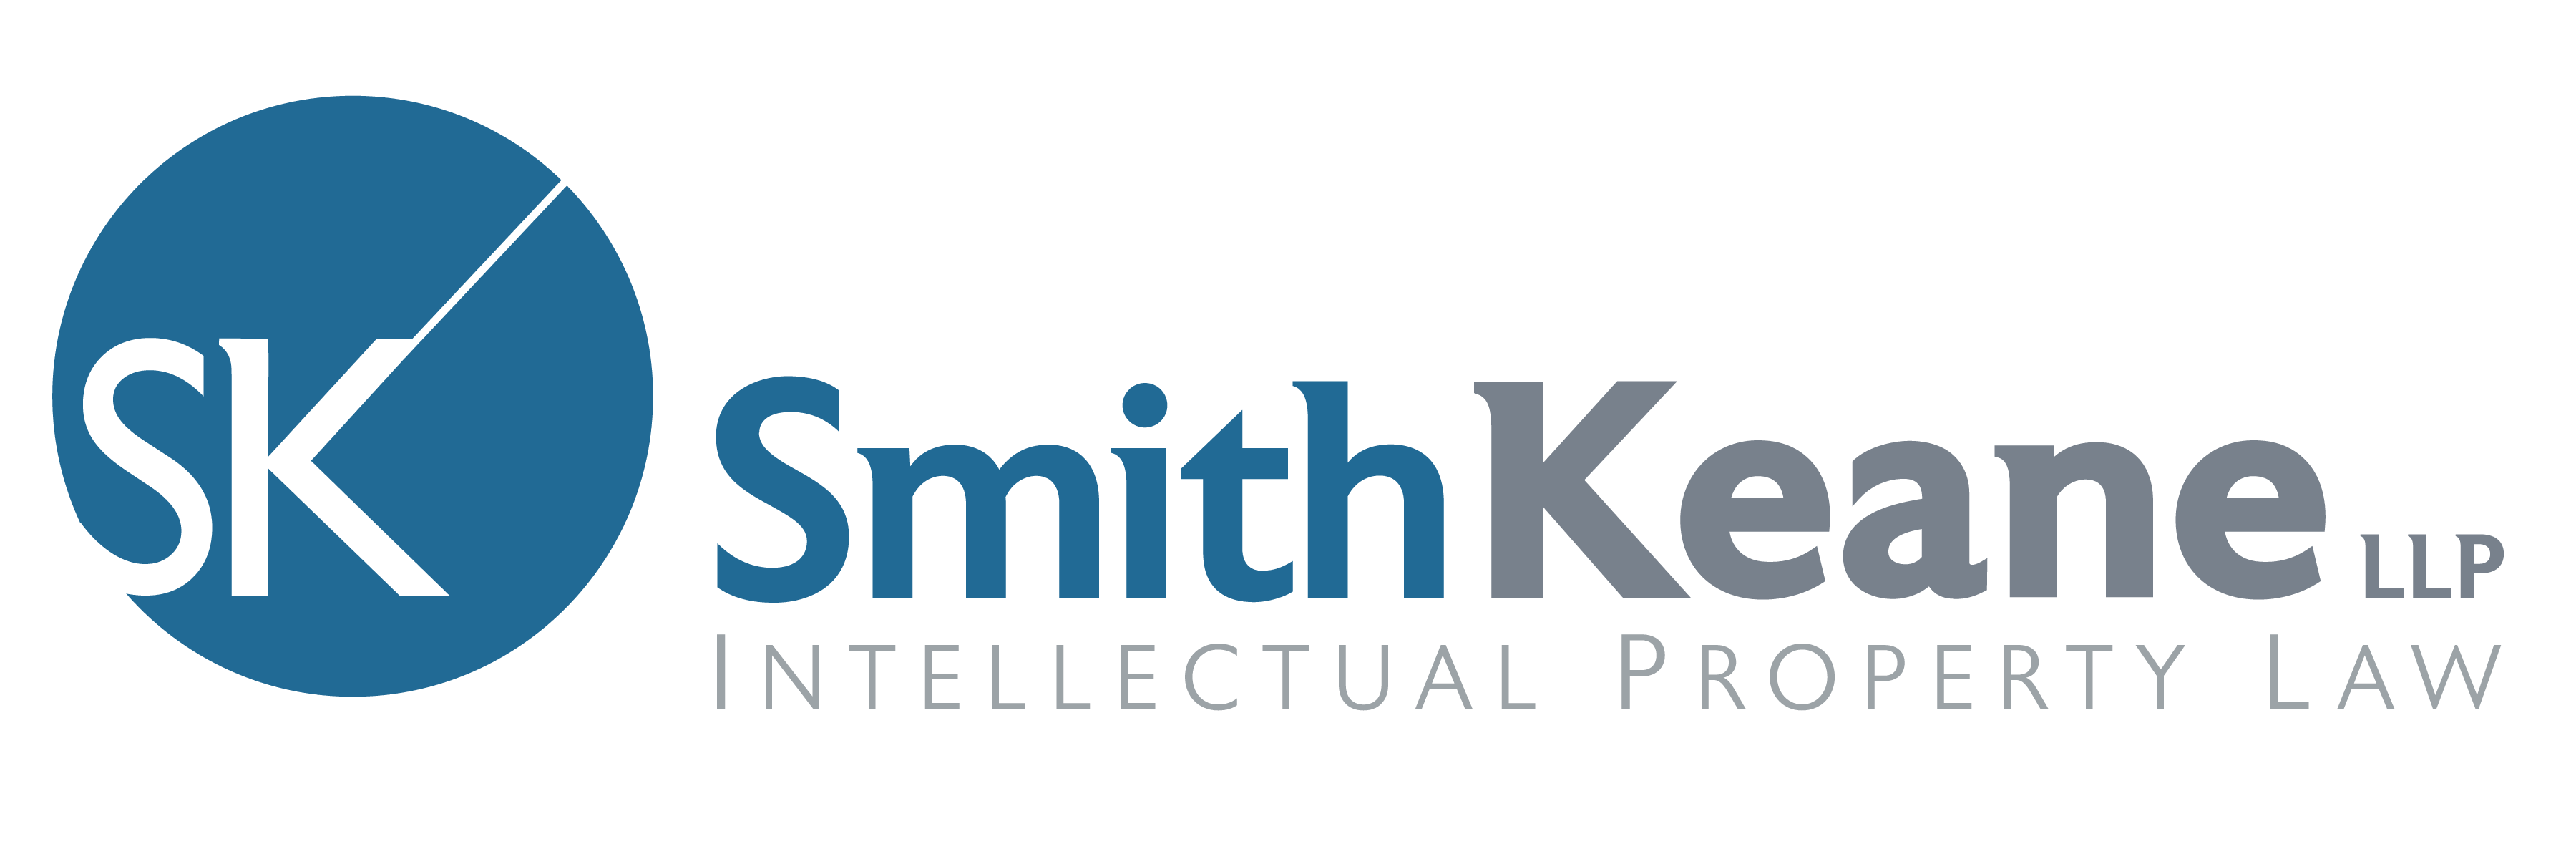 SmithKeaneLLP Intellectual Property Law